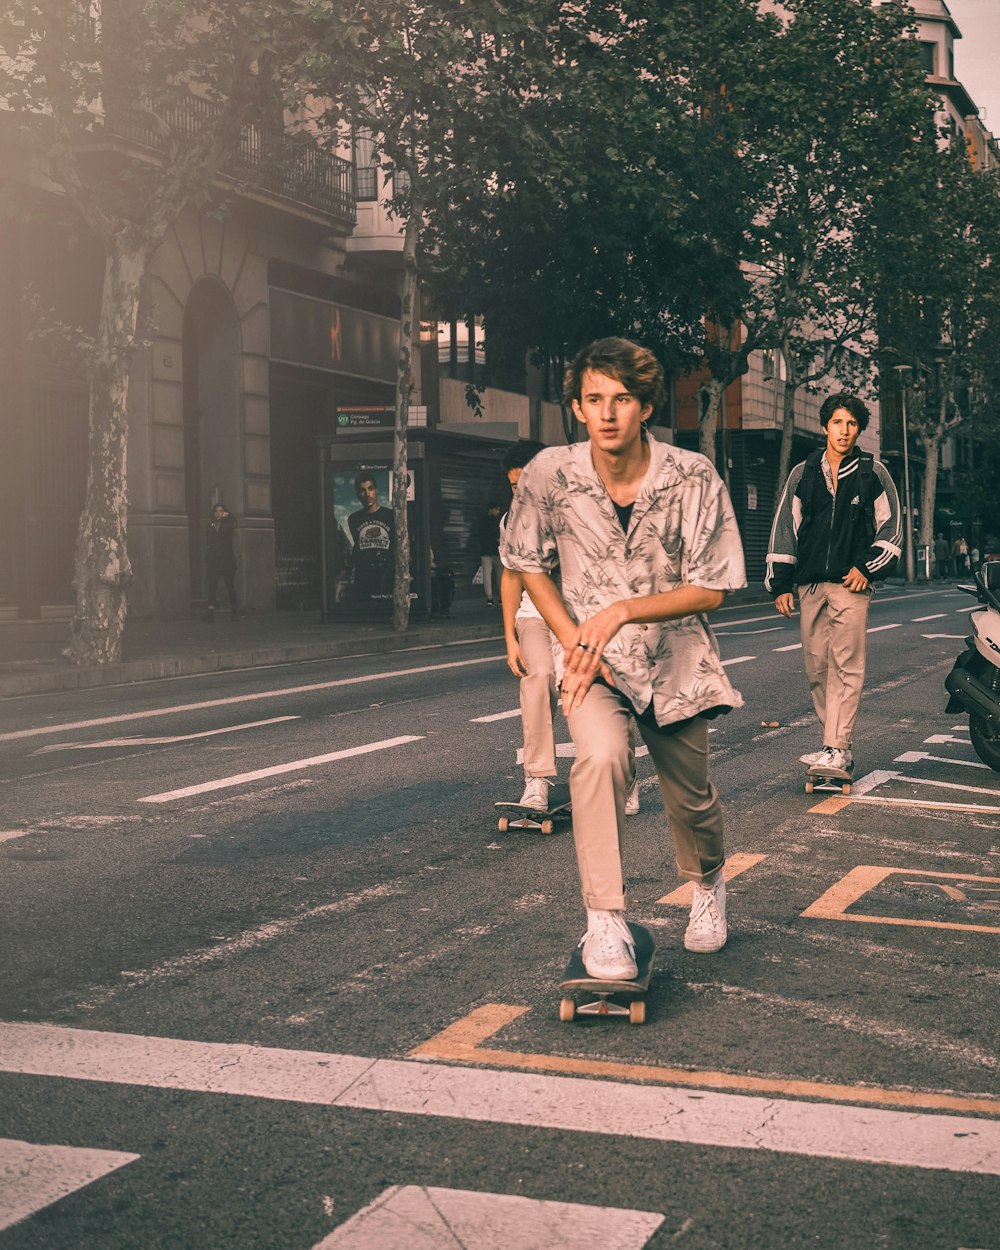 three kids skateboarding on road